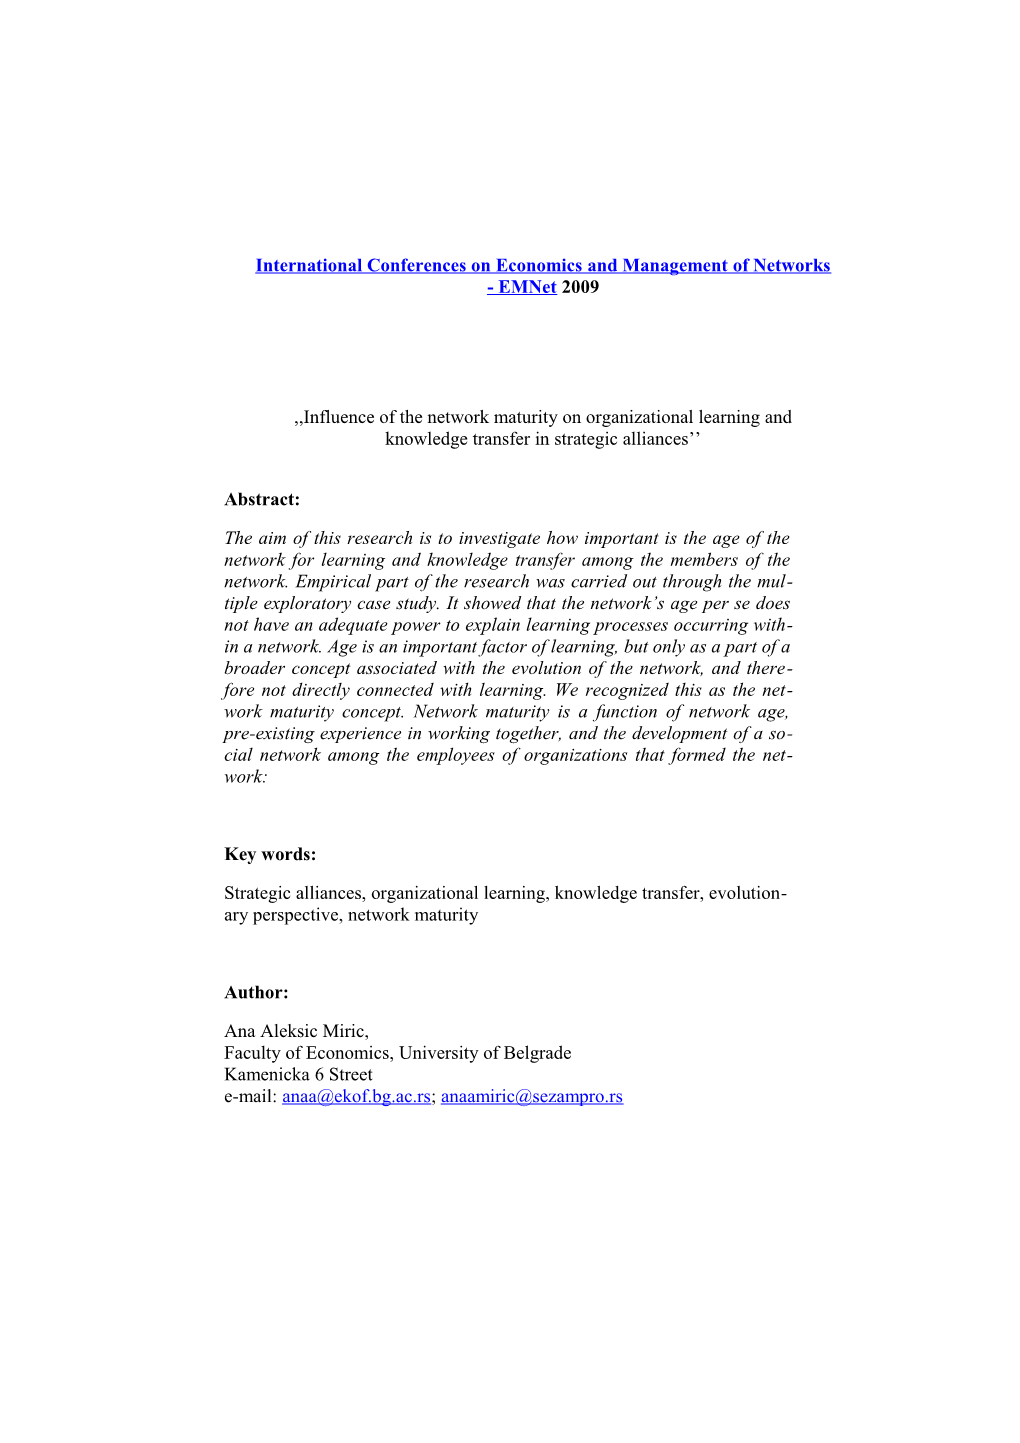 International Conferences on Economics and Management of Networks - Emnet 2009